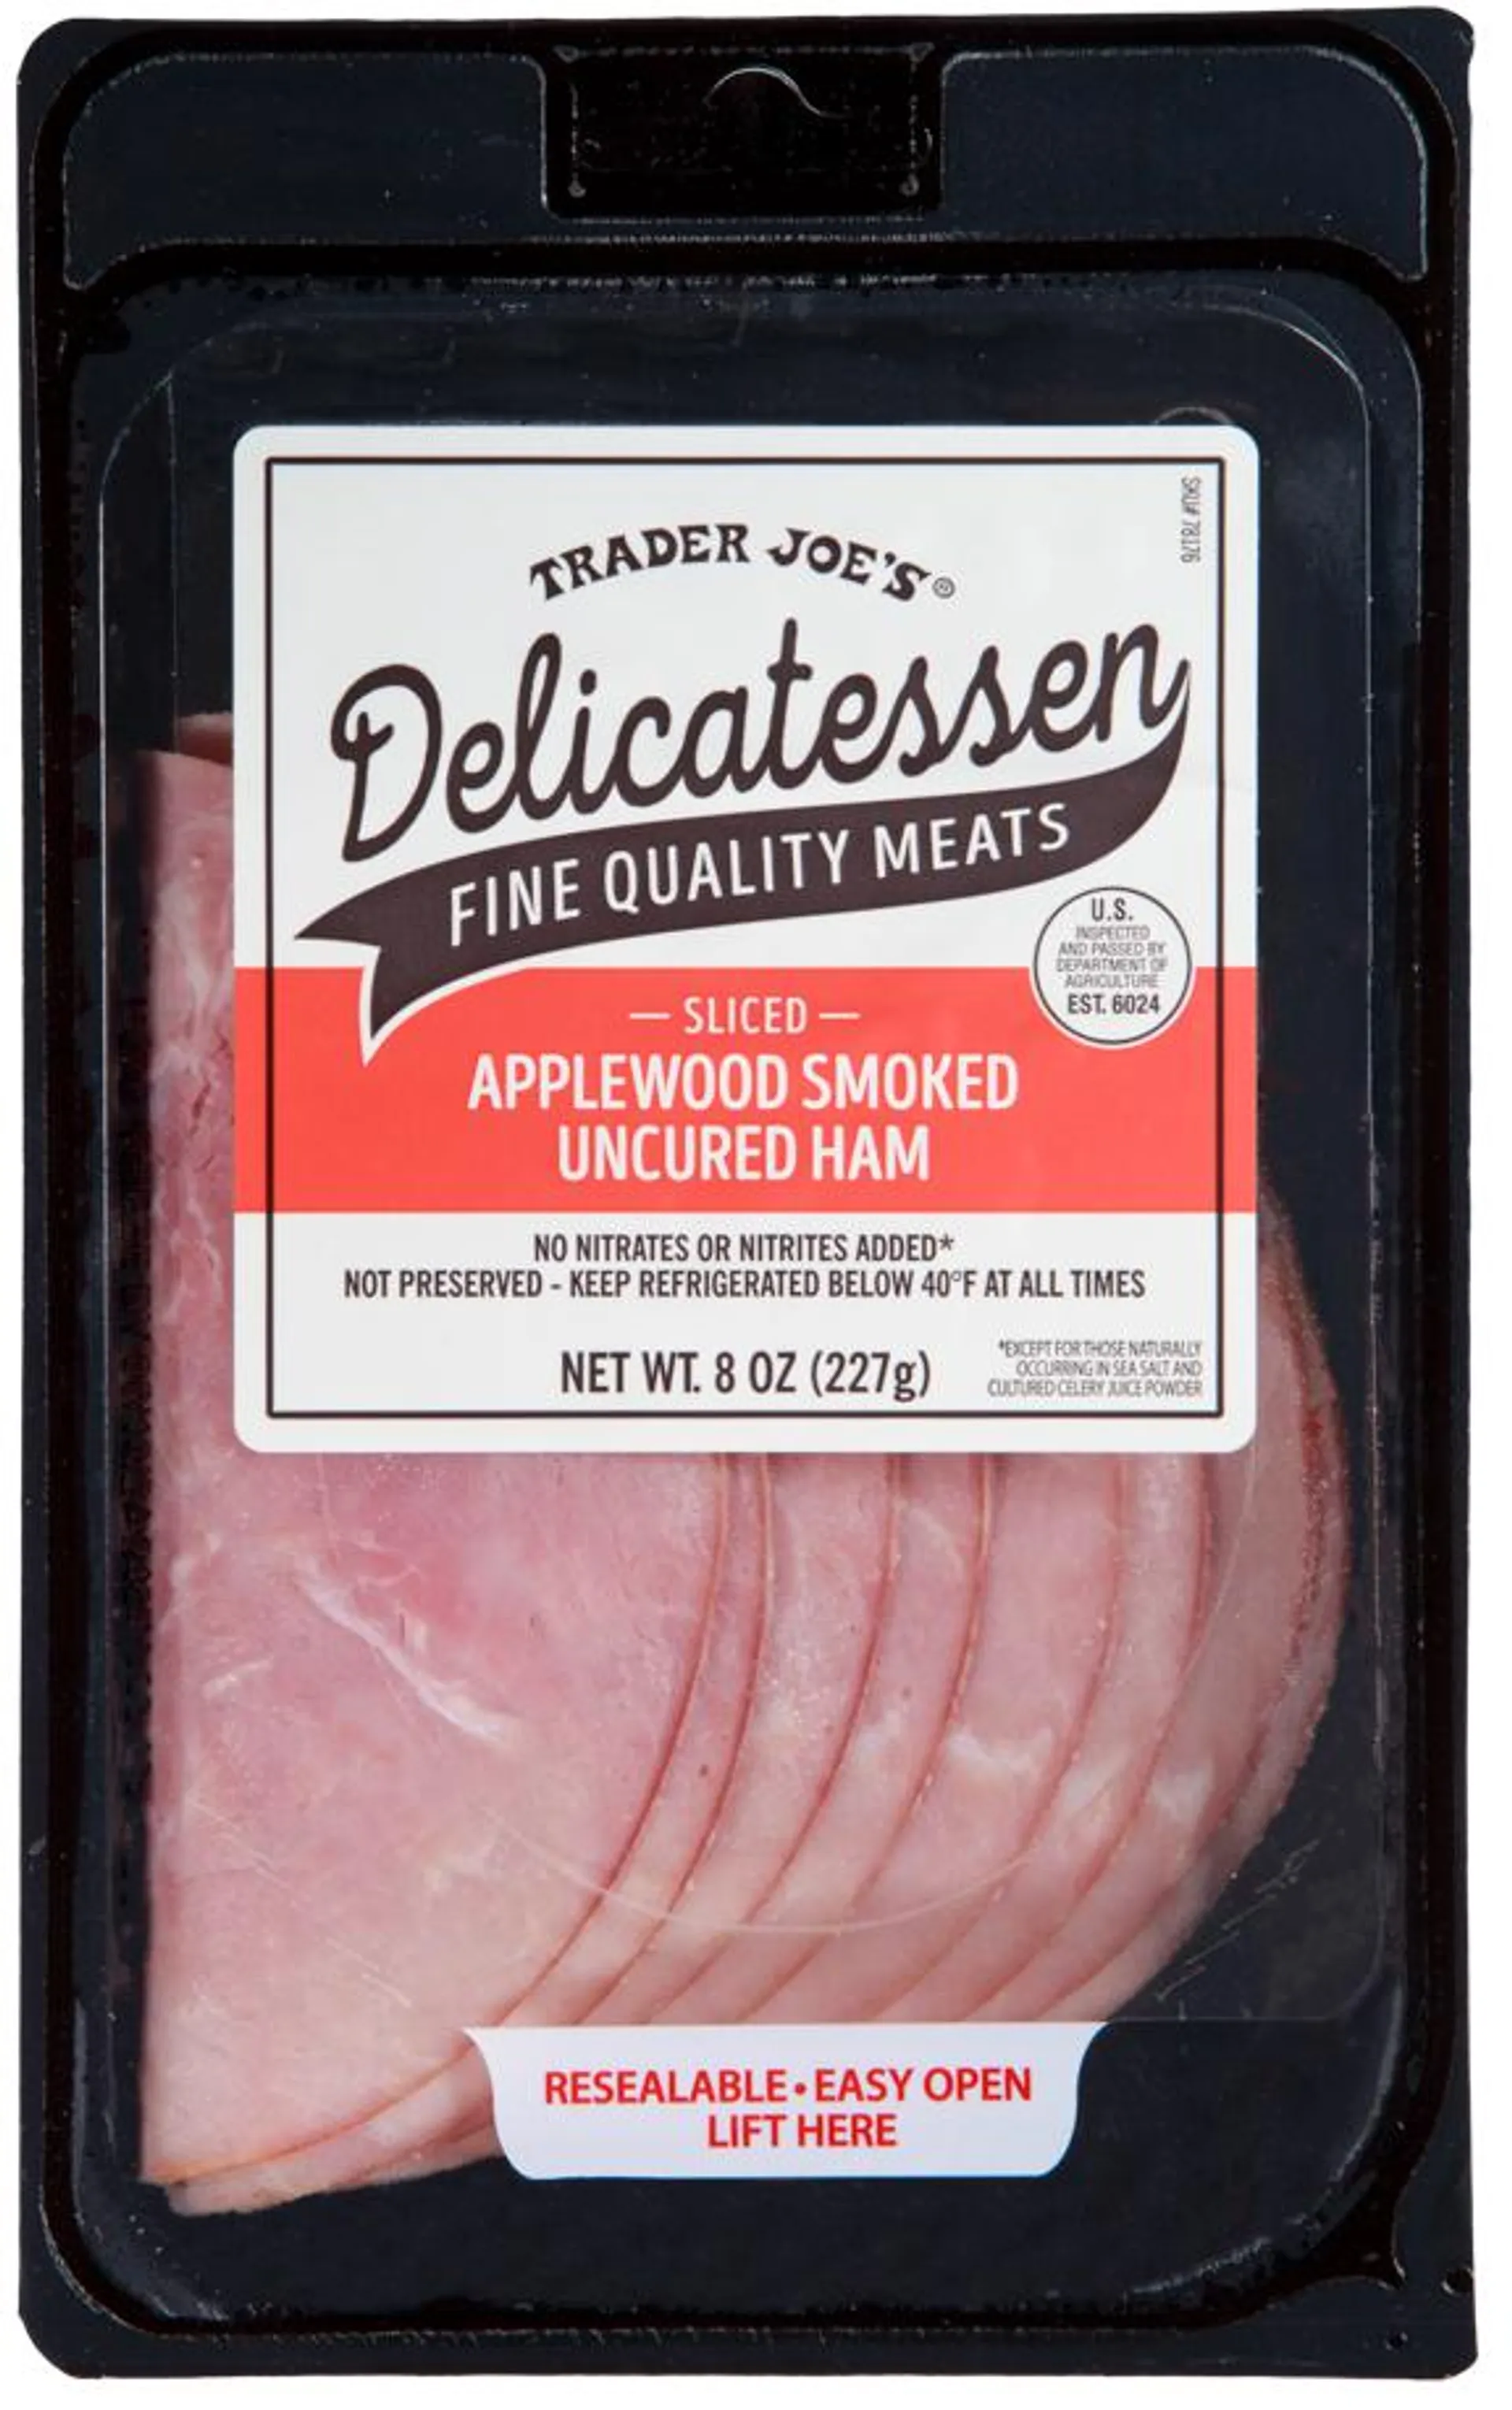 Sliced Applewood Smoked Uncured Ham